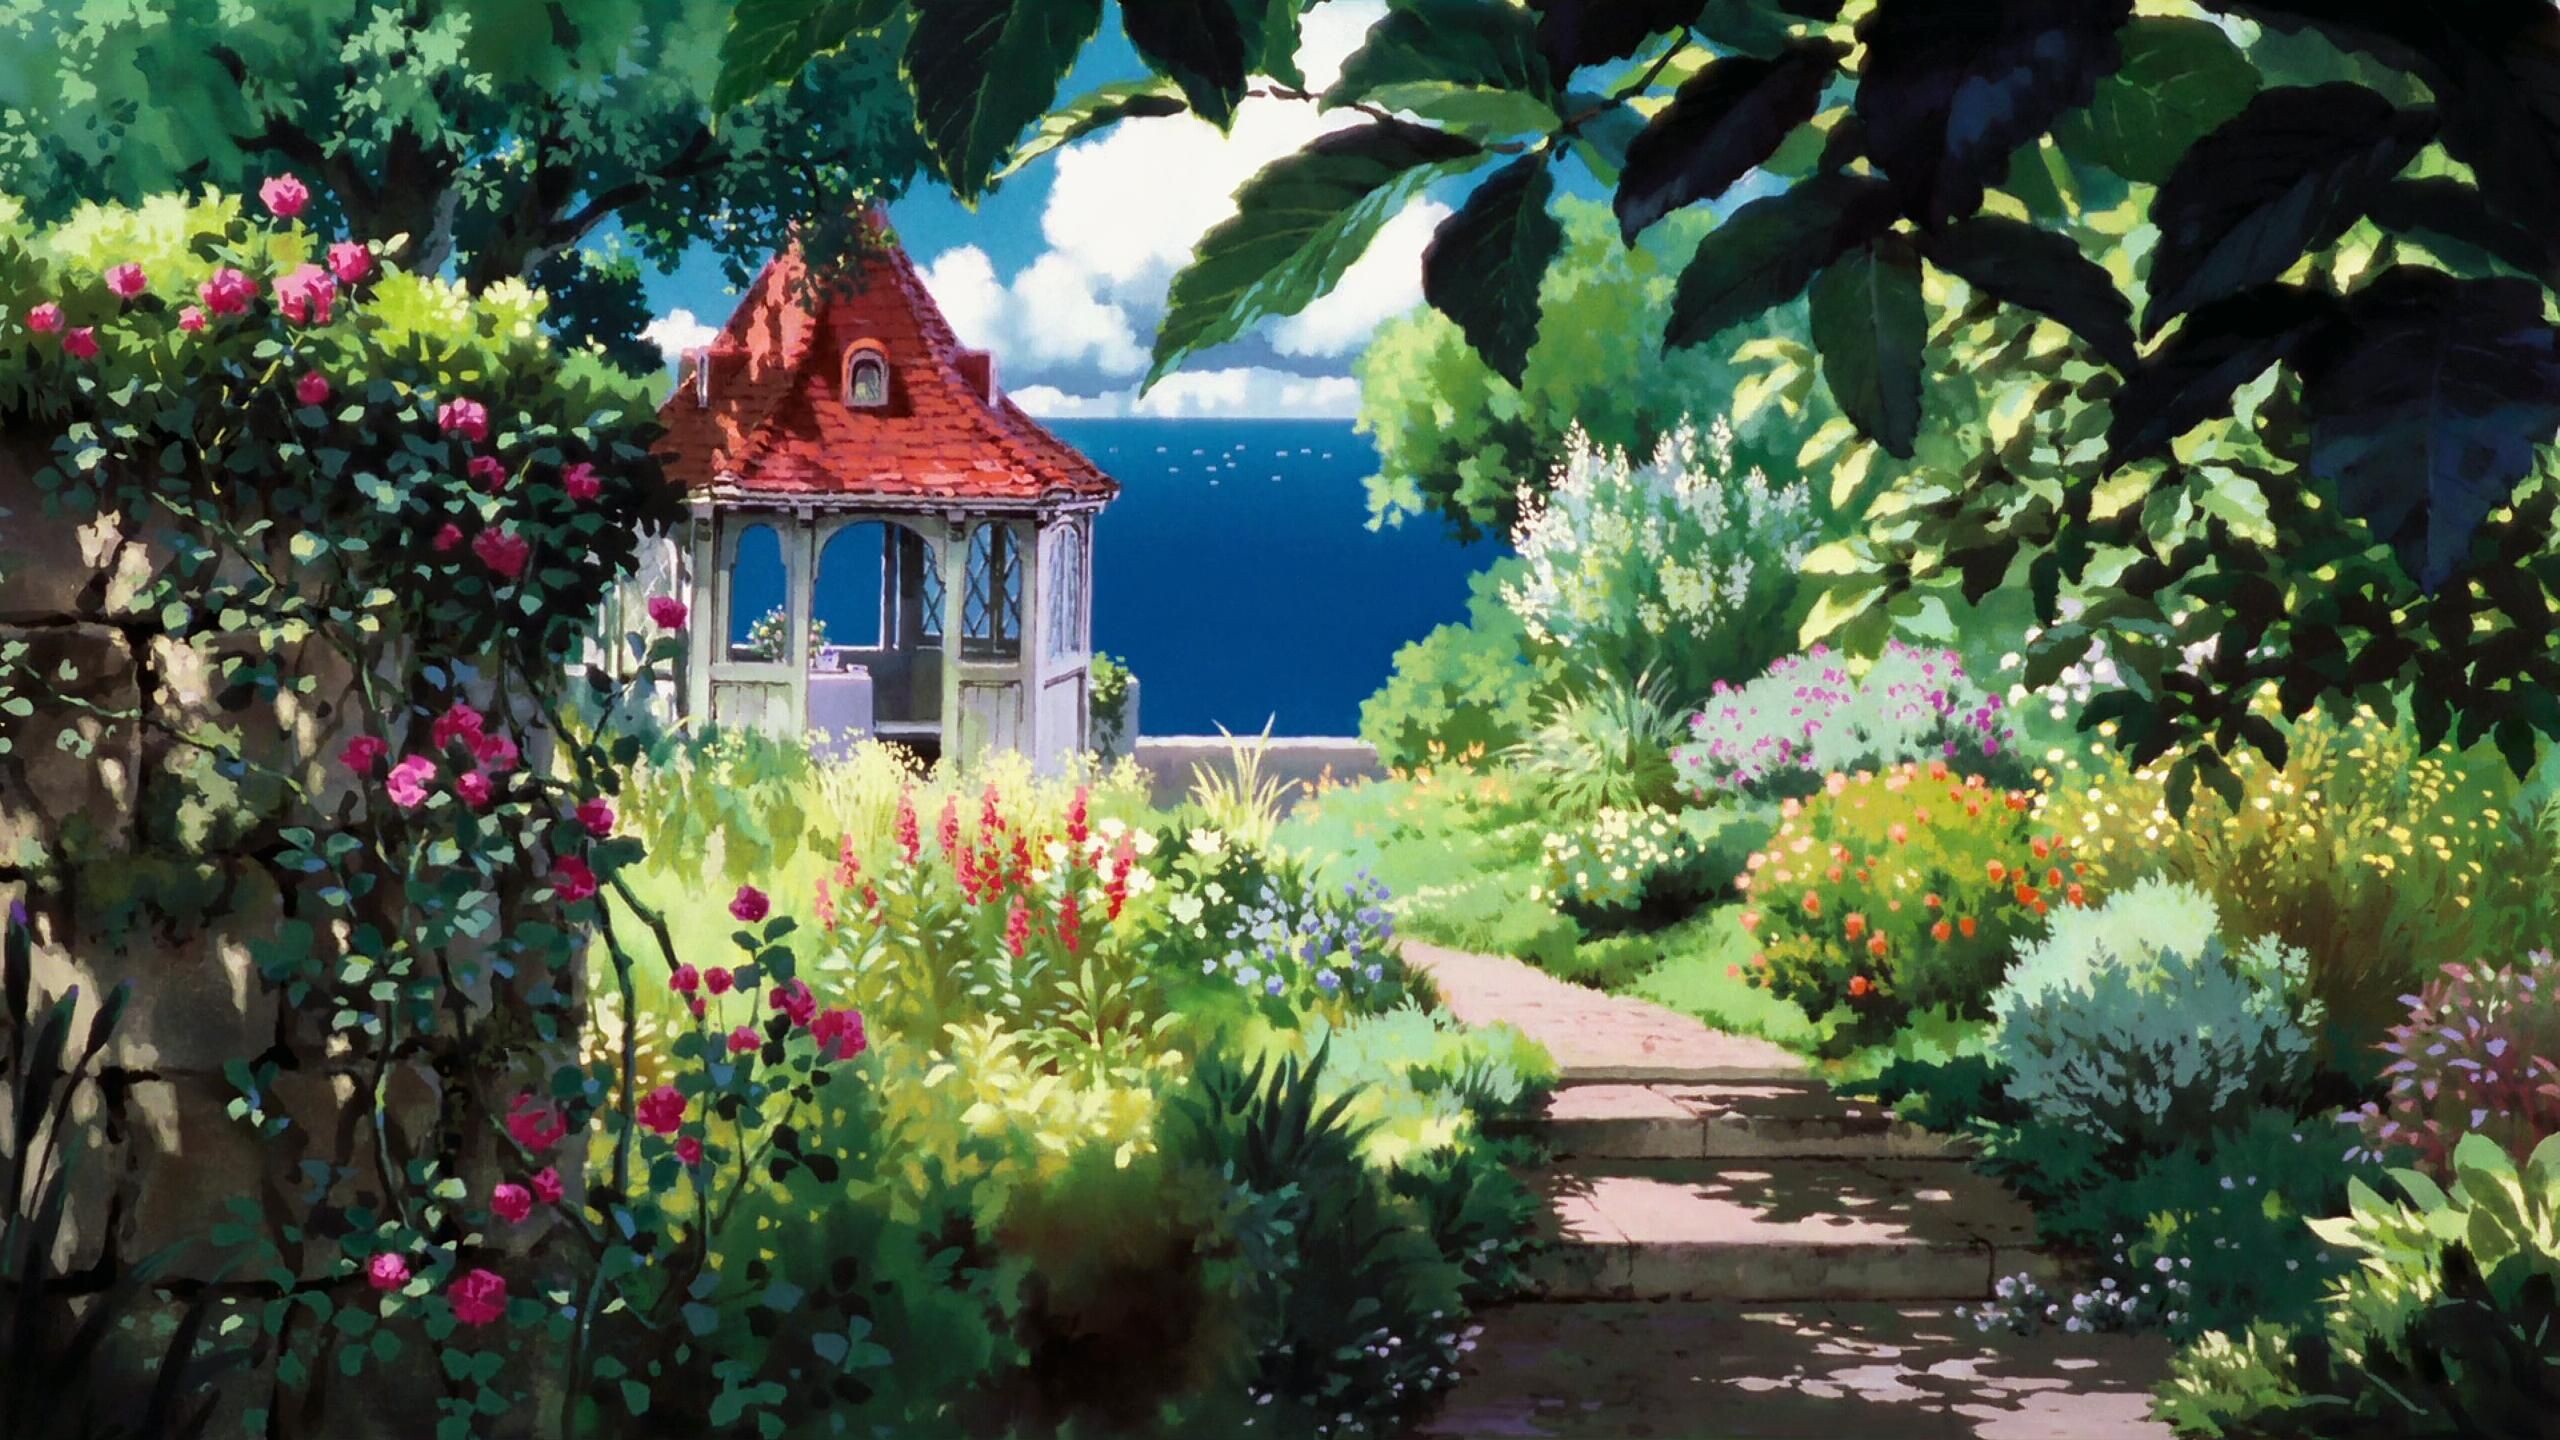 Studio Ghibli: The company has its own Museum in Mitaka, Japan. 2560x1440 HD Background.